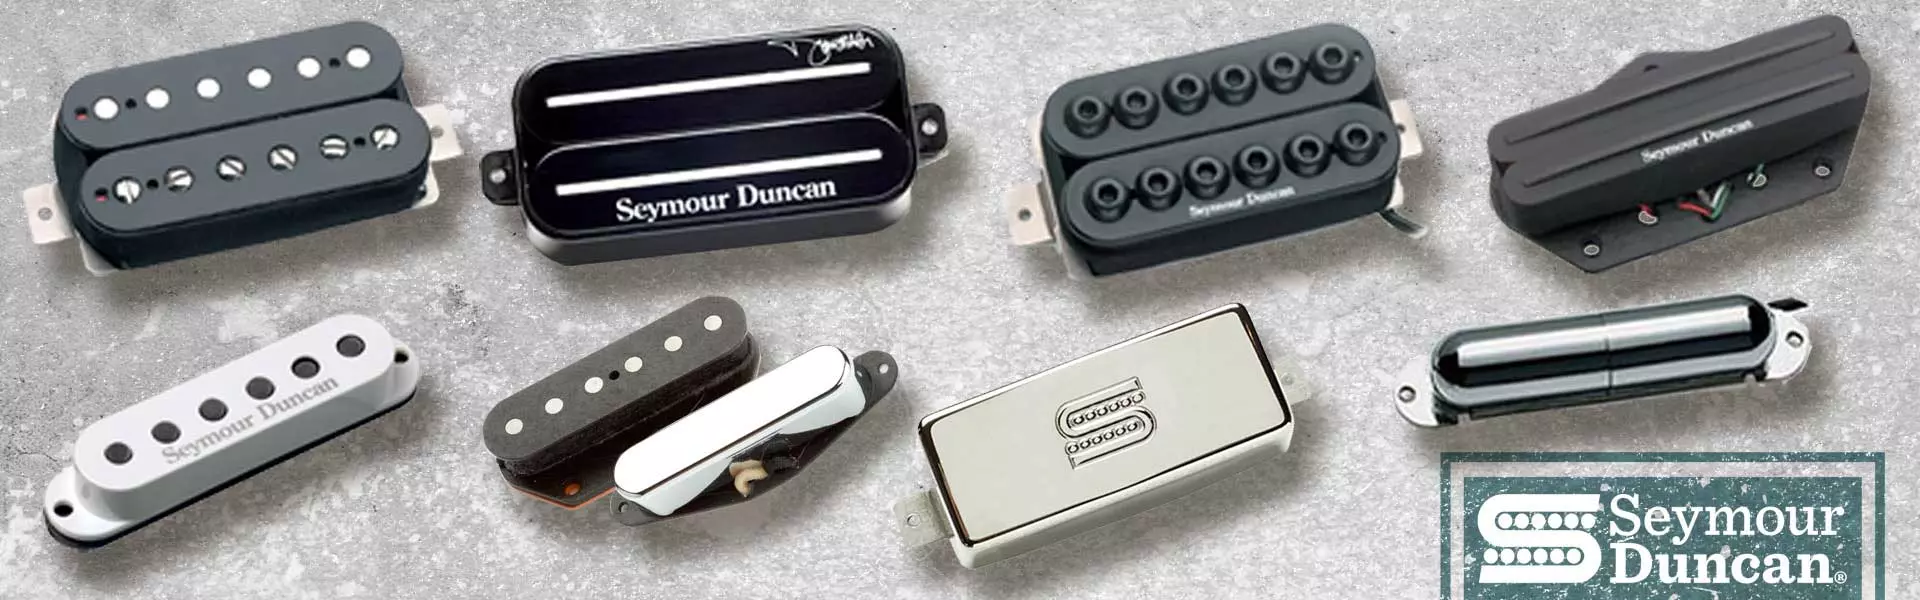 Différents micro guitare de la marque Seymour Duncan